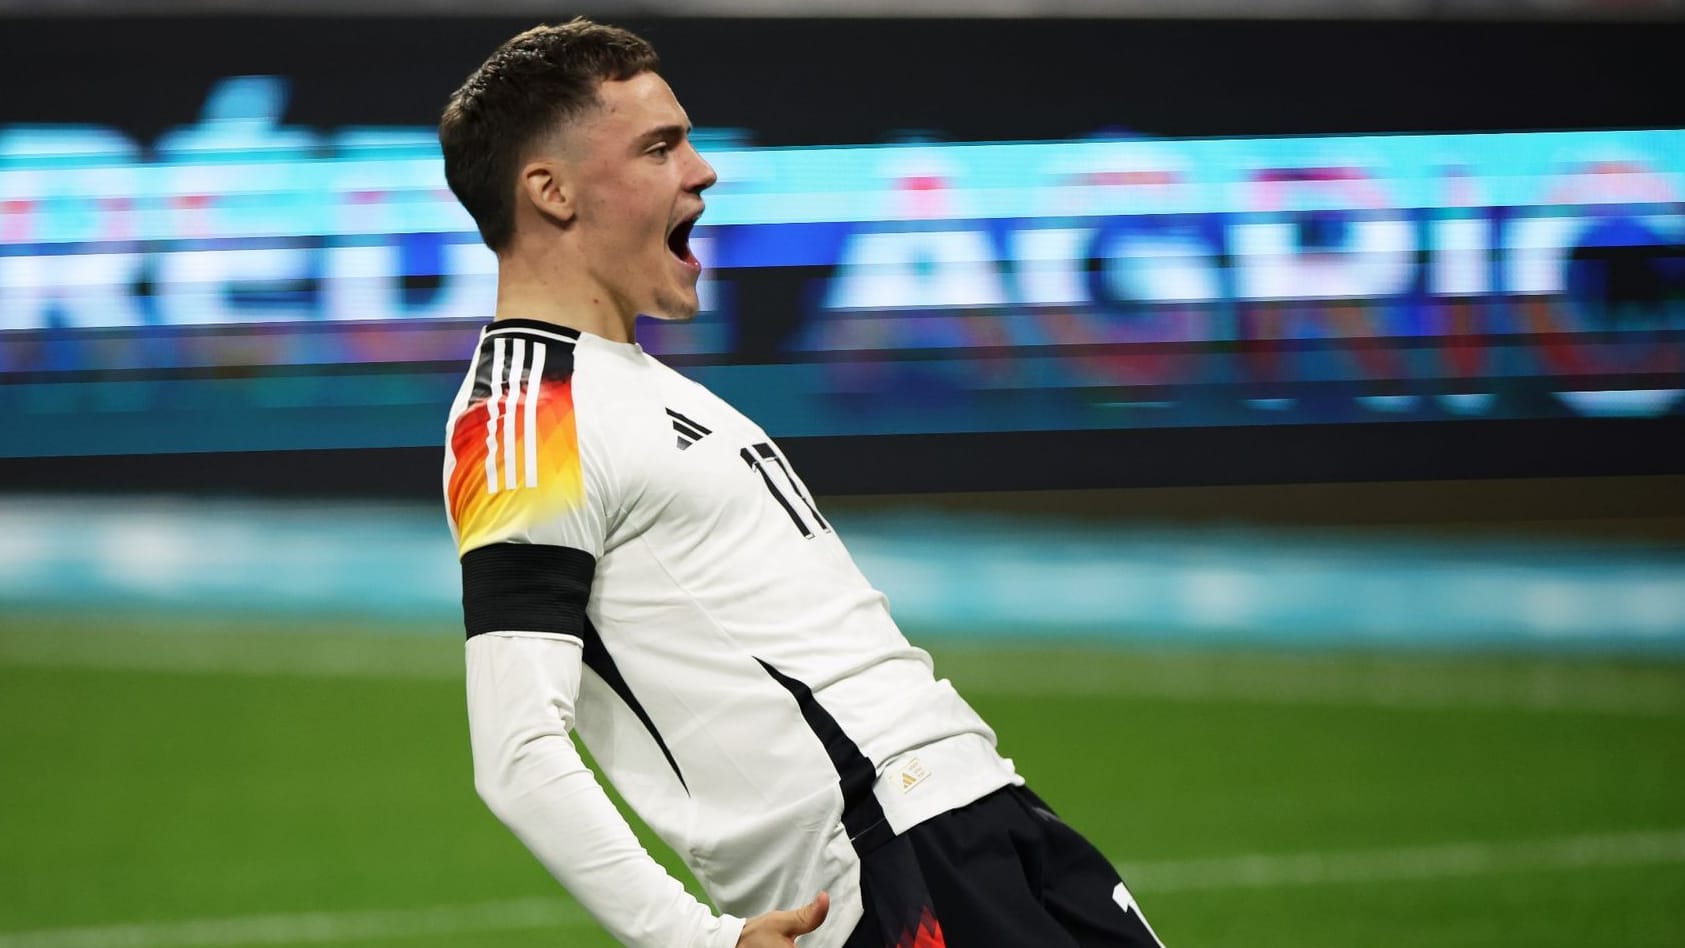 Nationalmannschaft: Wirtz erzielt schnellstes Tor der DFB-Geschichte